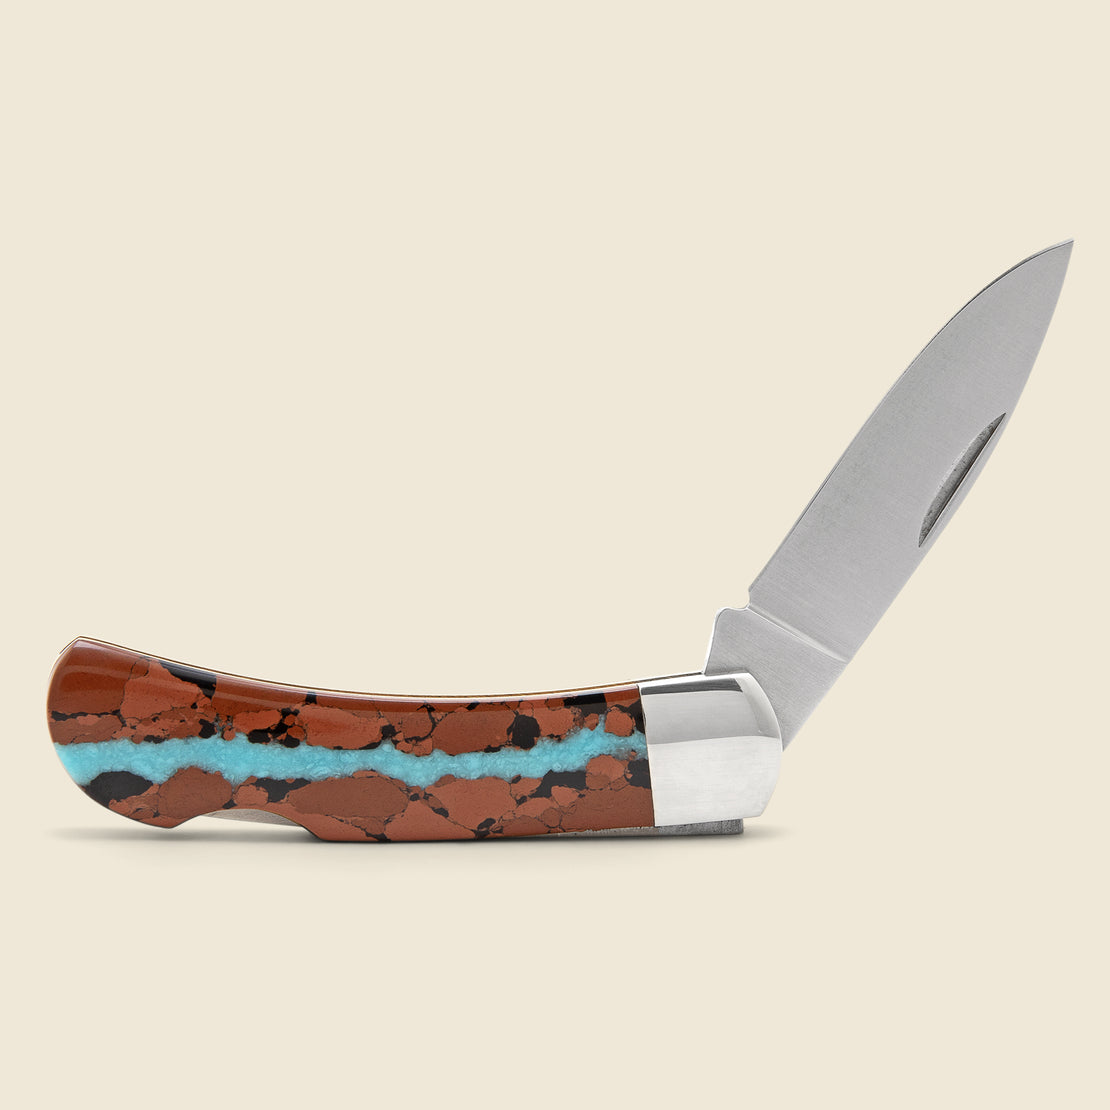 Home 3-Inch Lockback Knife - Turquoise Vein